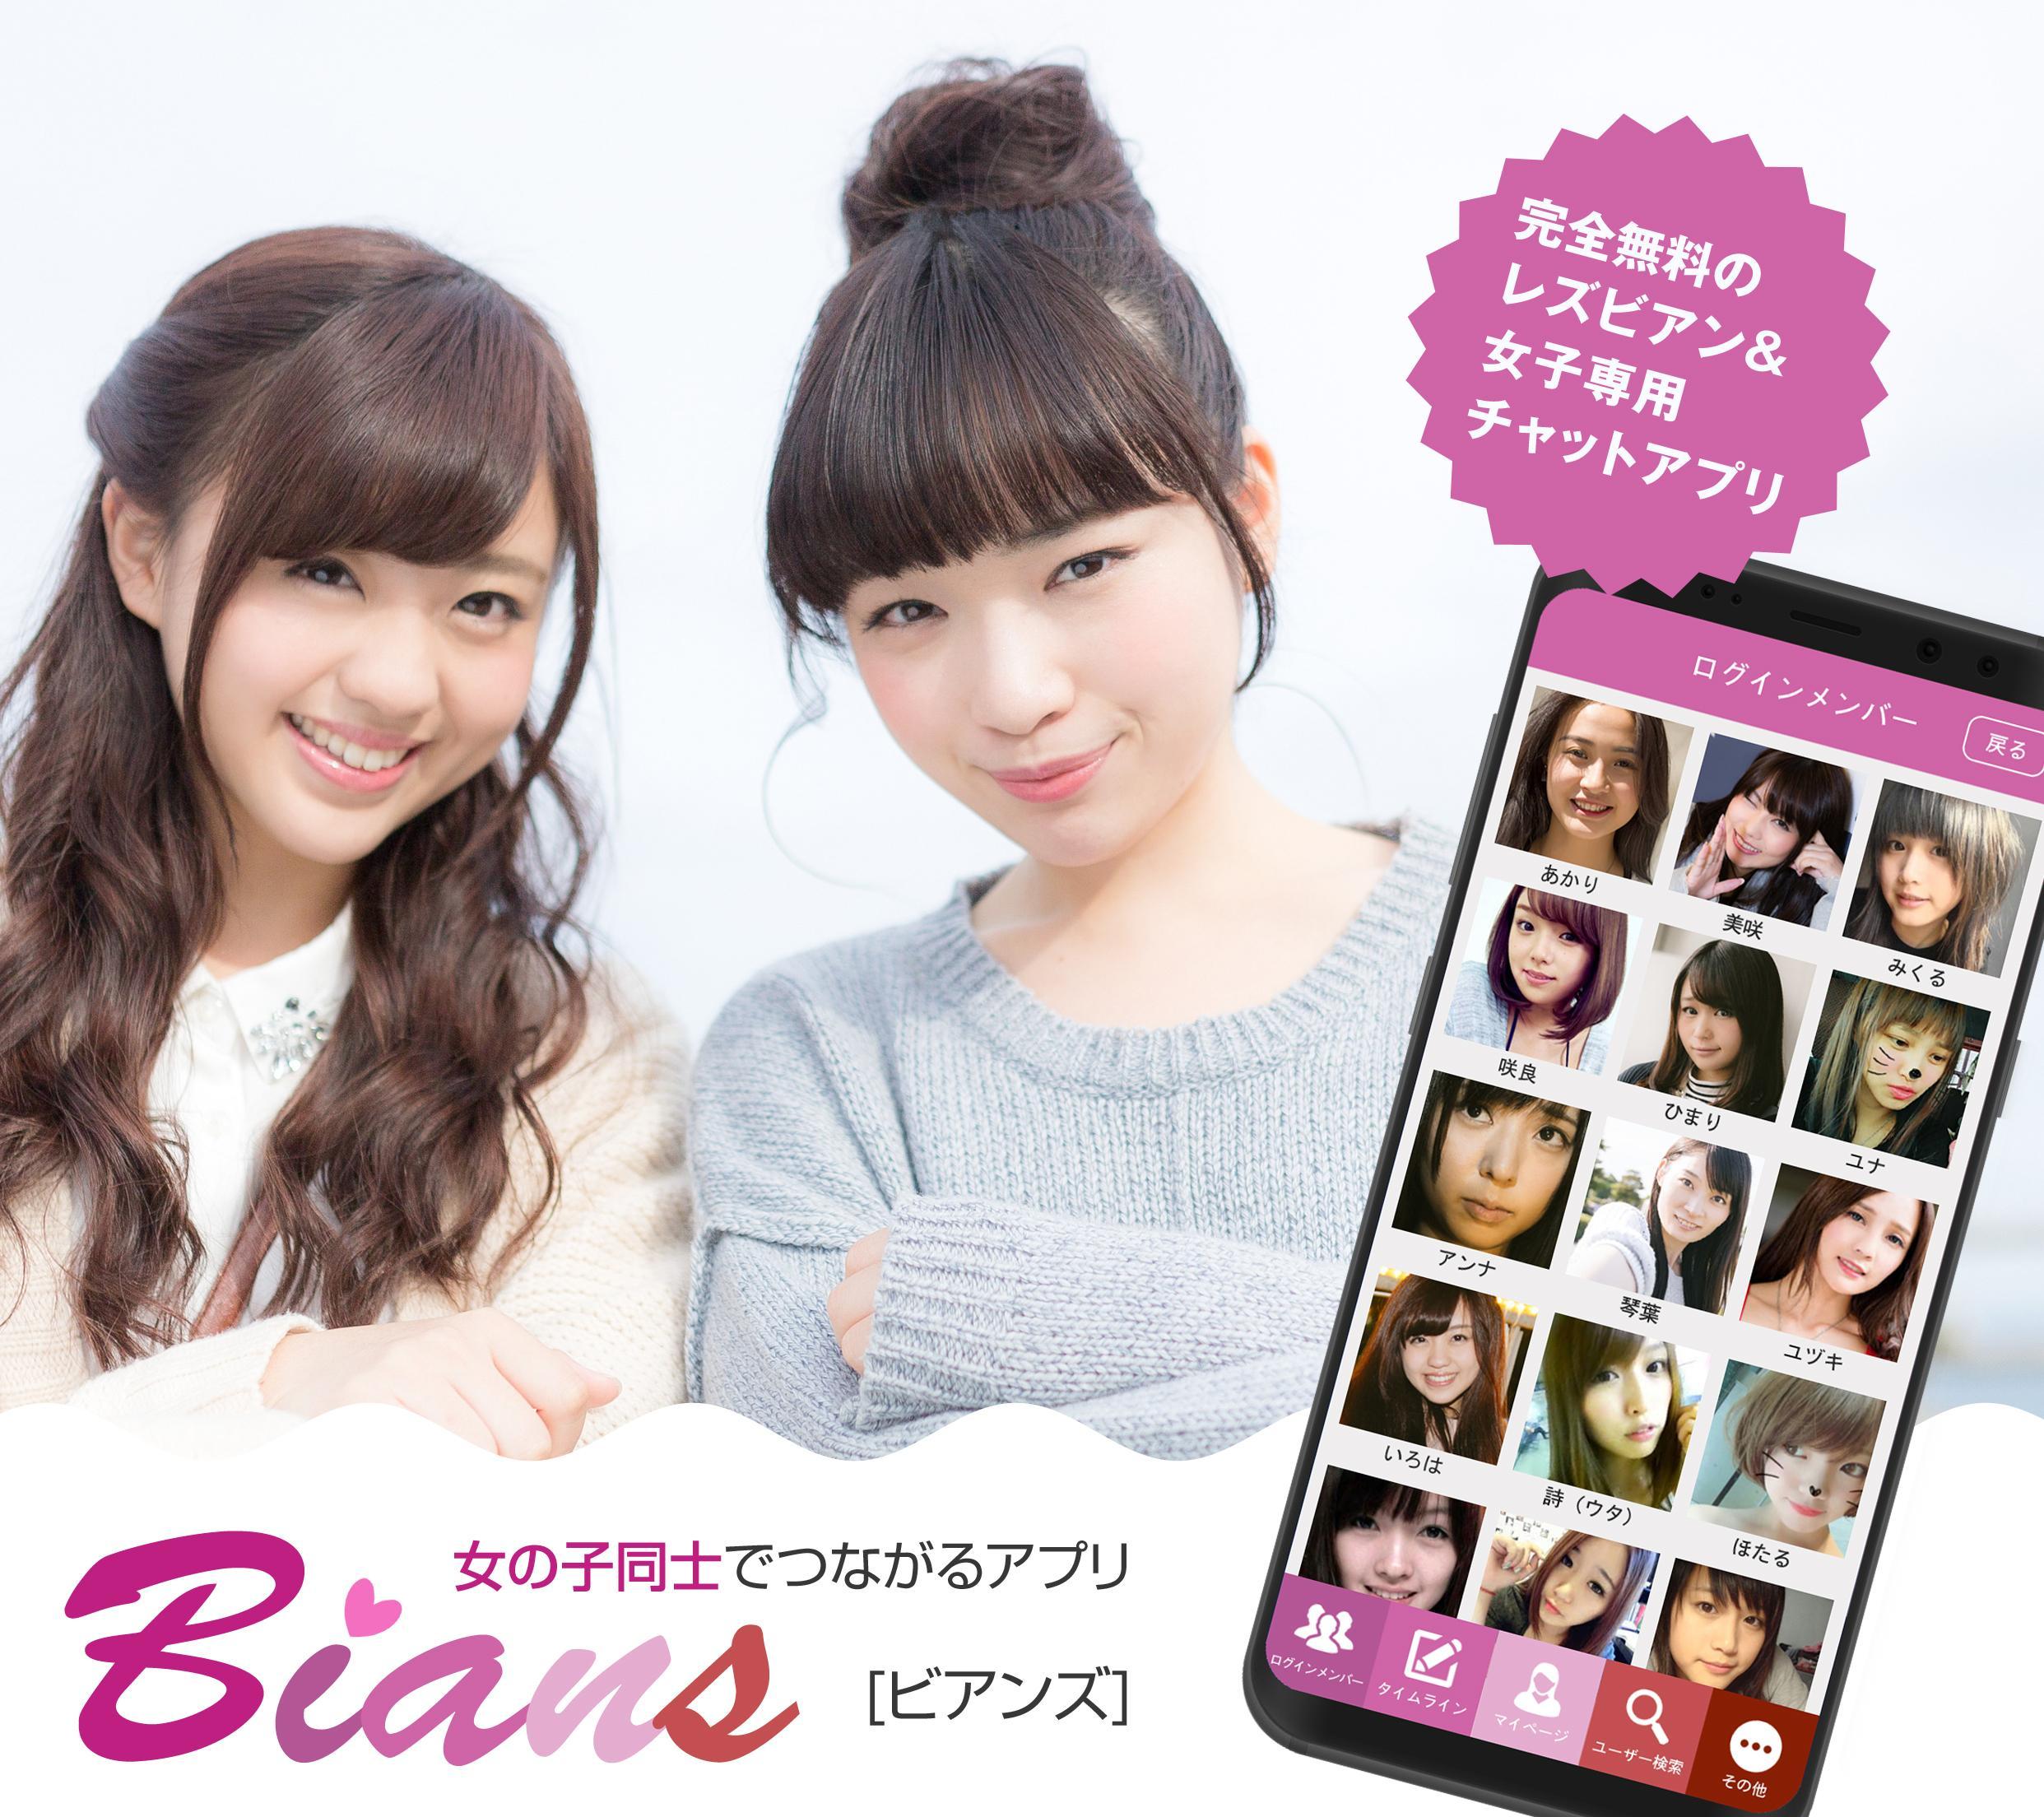 Bians 女の子同士でつながるアプリ For Android Apk Download